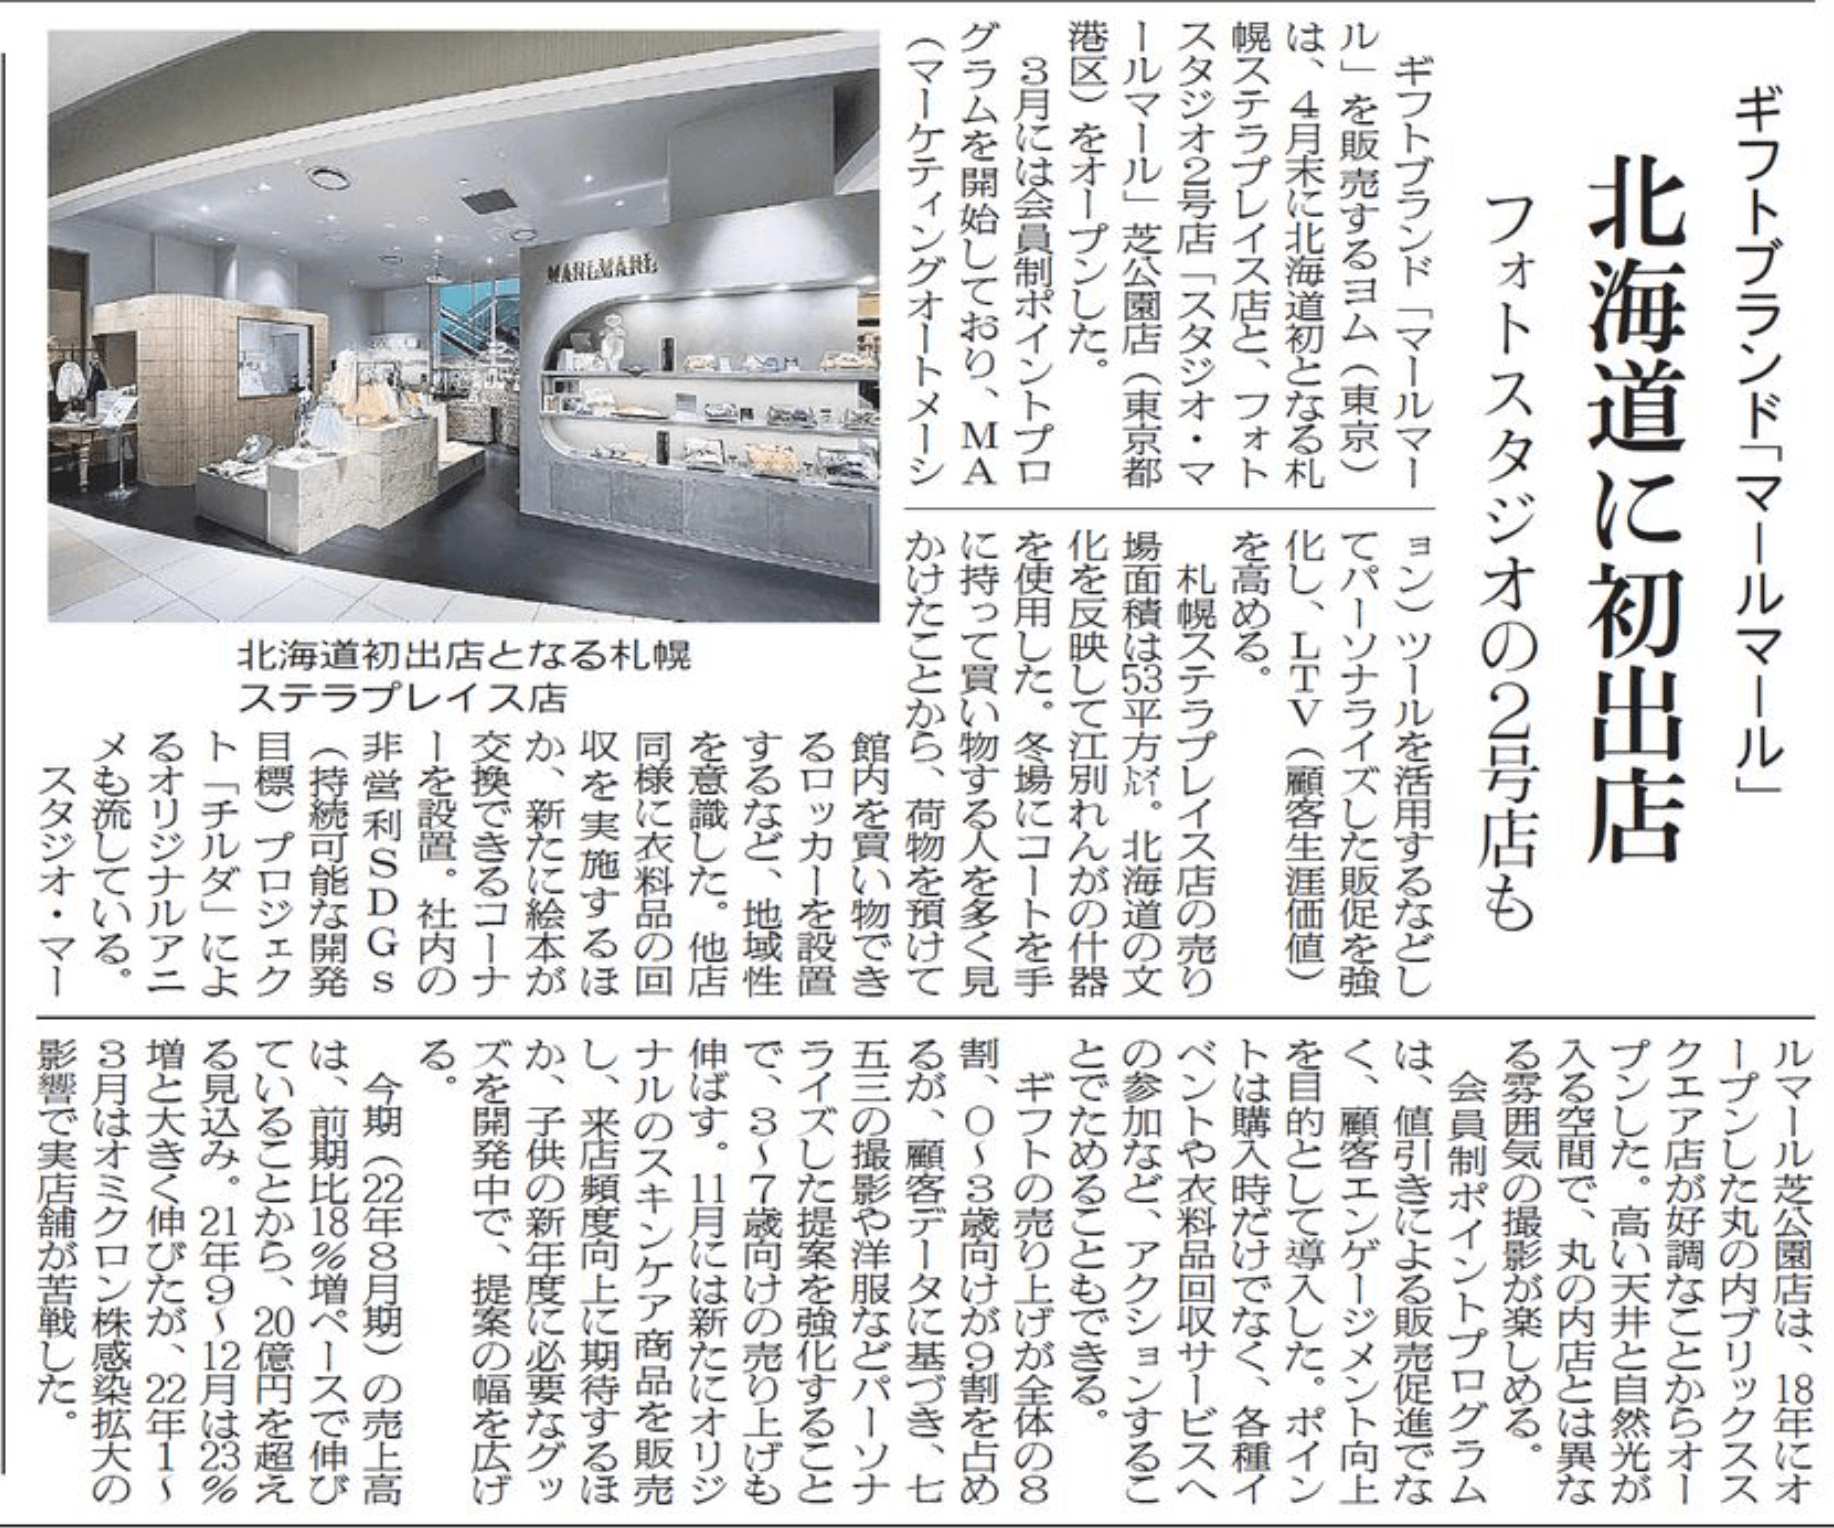 MARLMARL 札幌ステラプレイス店 が繊研新聞に掲載されました